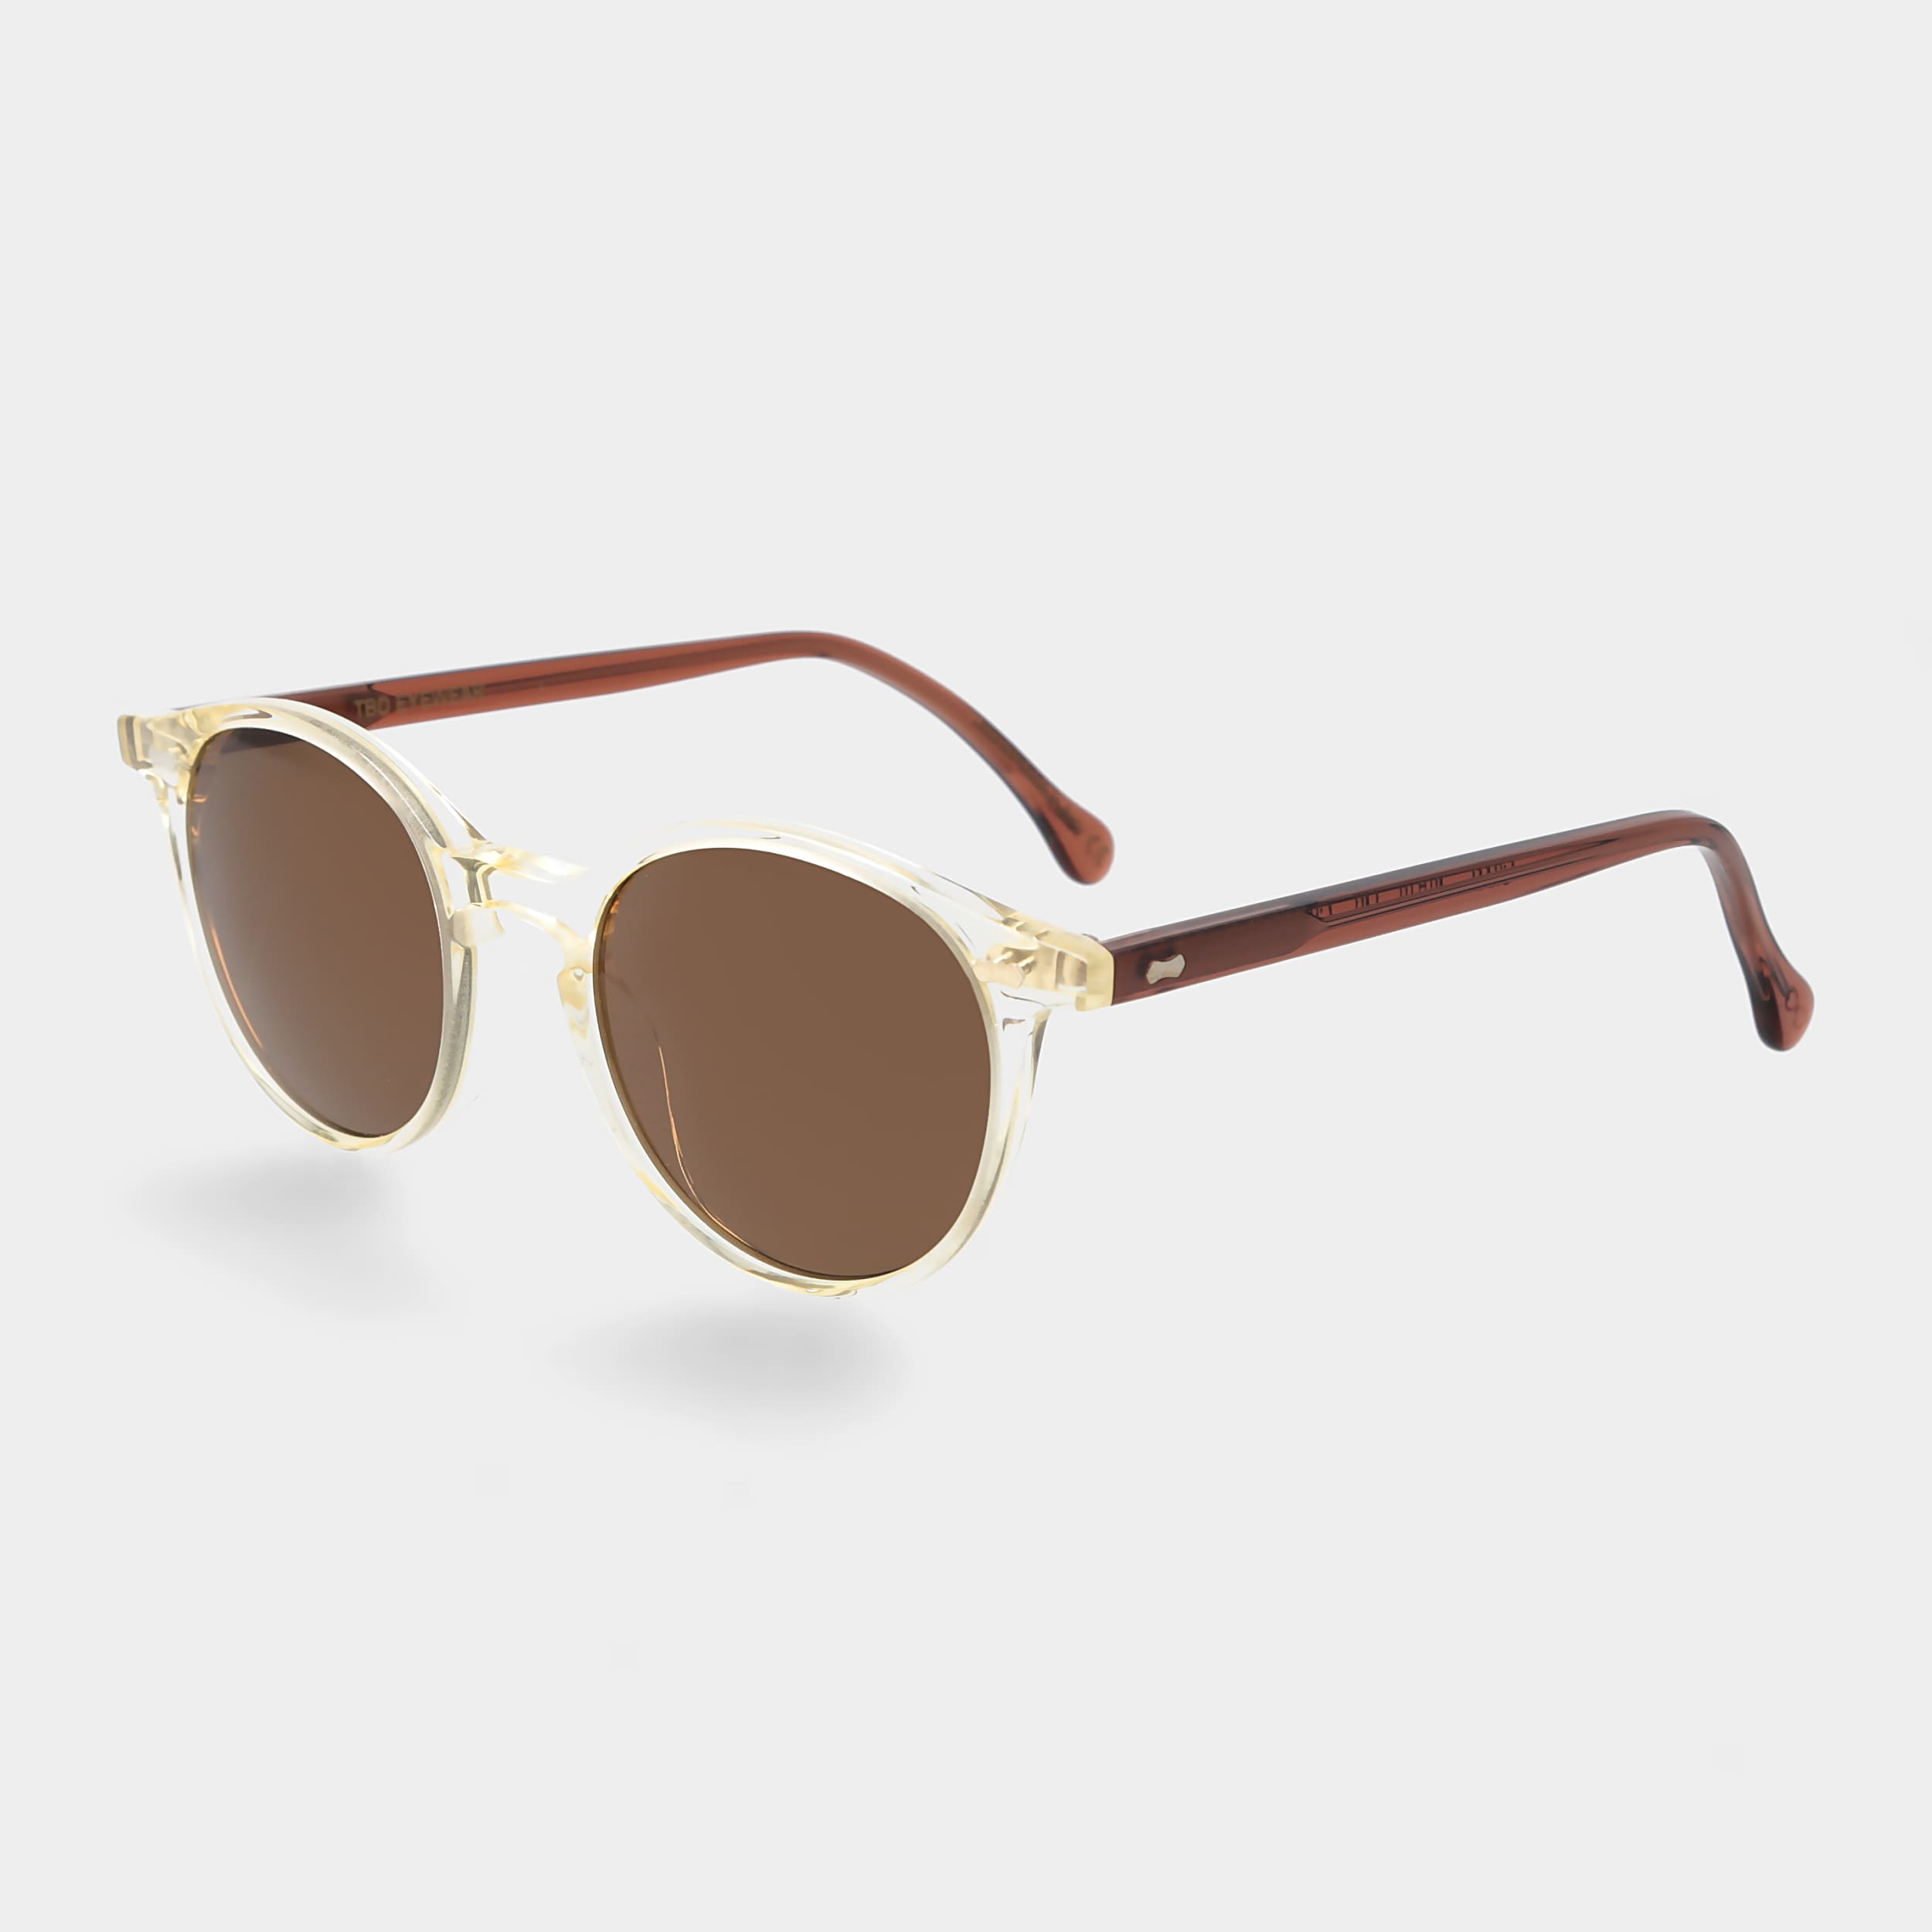 Sunglasses with Brown Lenses, | Eyewear TBD in Italy handmade